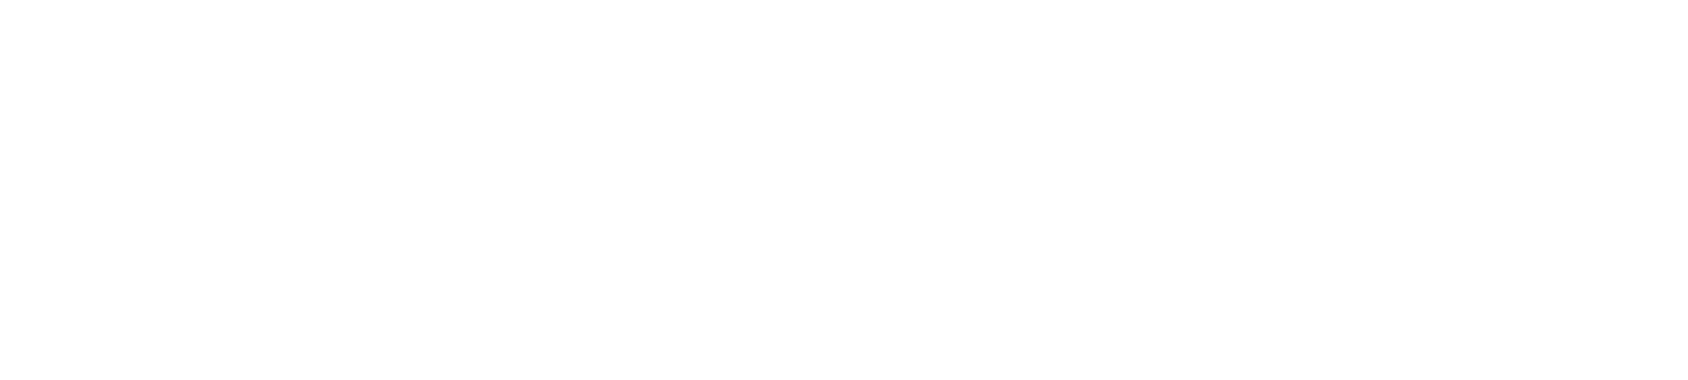 Coupang Logo groß für dunkle Hintergründe (transparentes PNG)